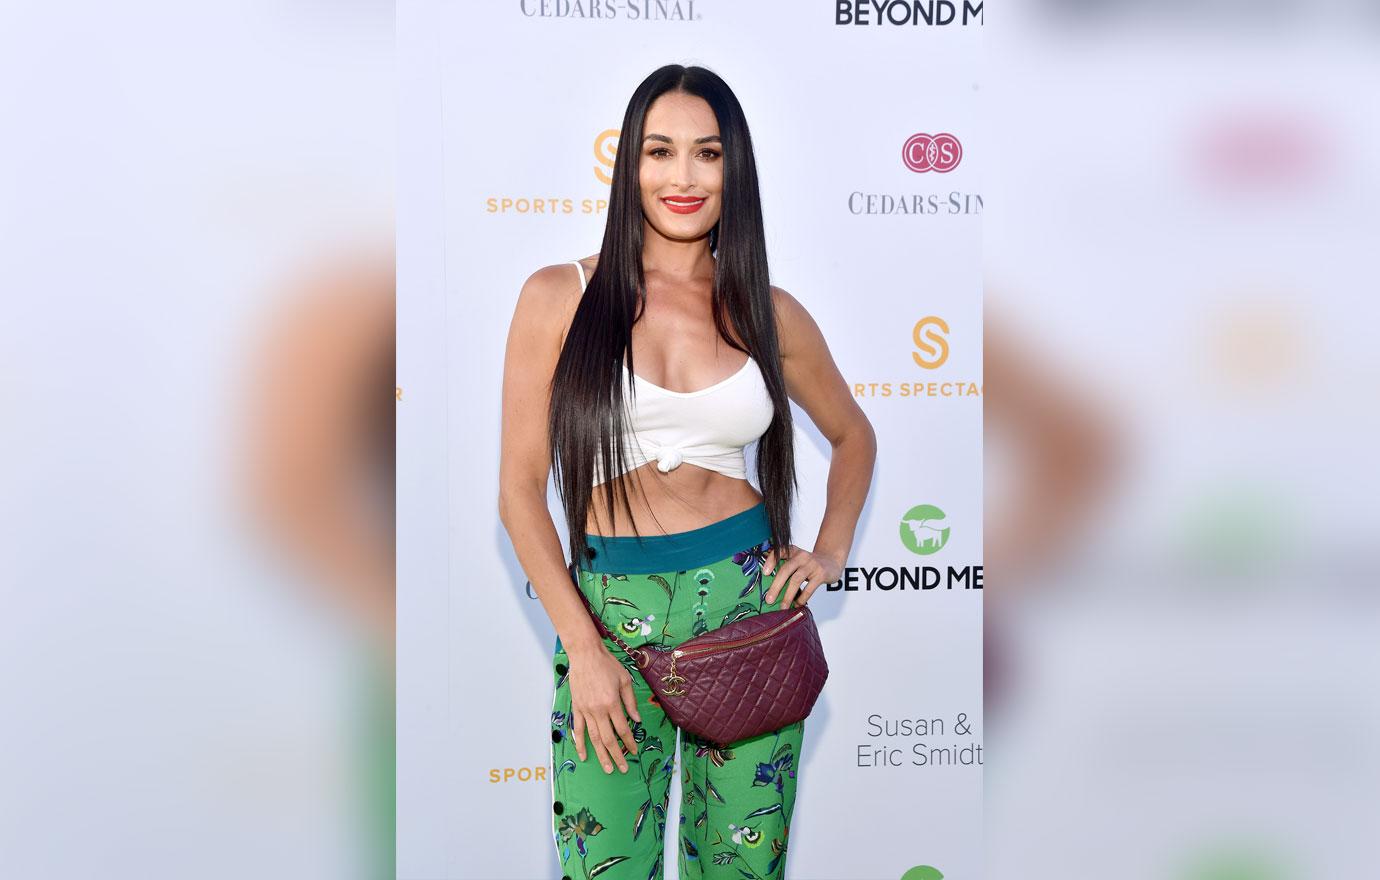 Nikki Bella Los Angeles August 5, 2019 – Star Style